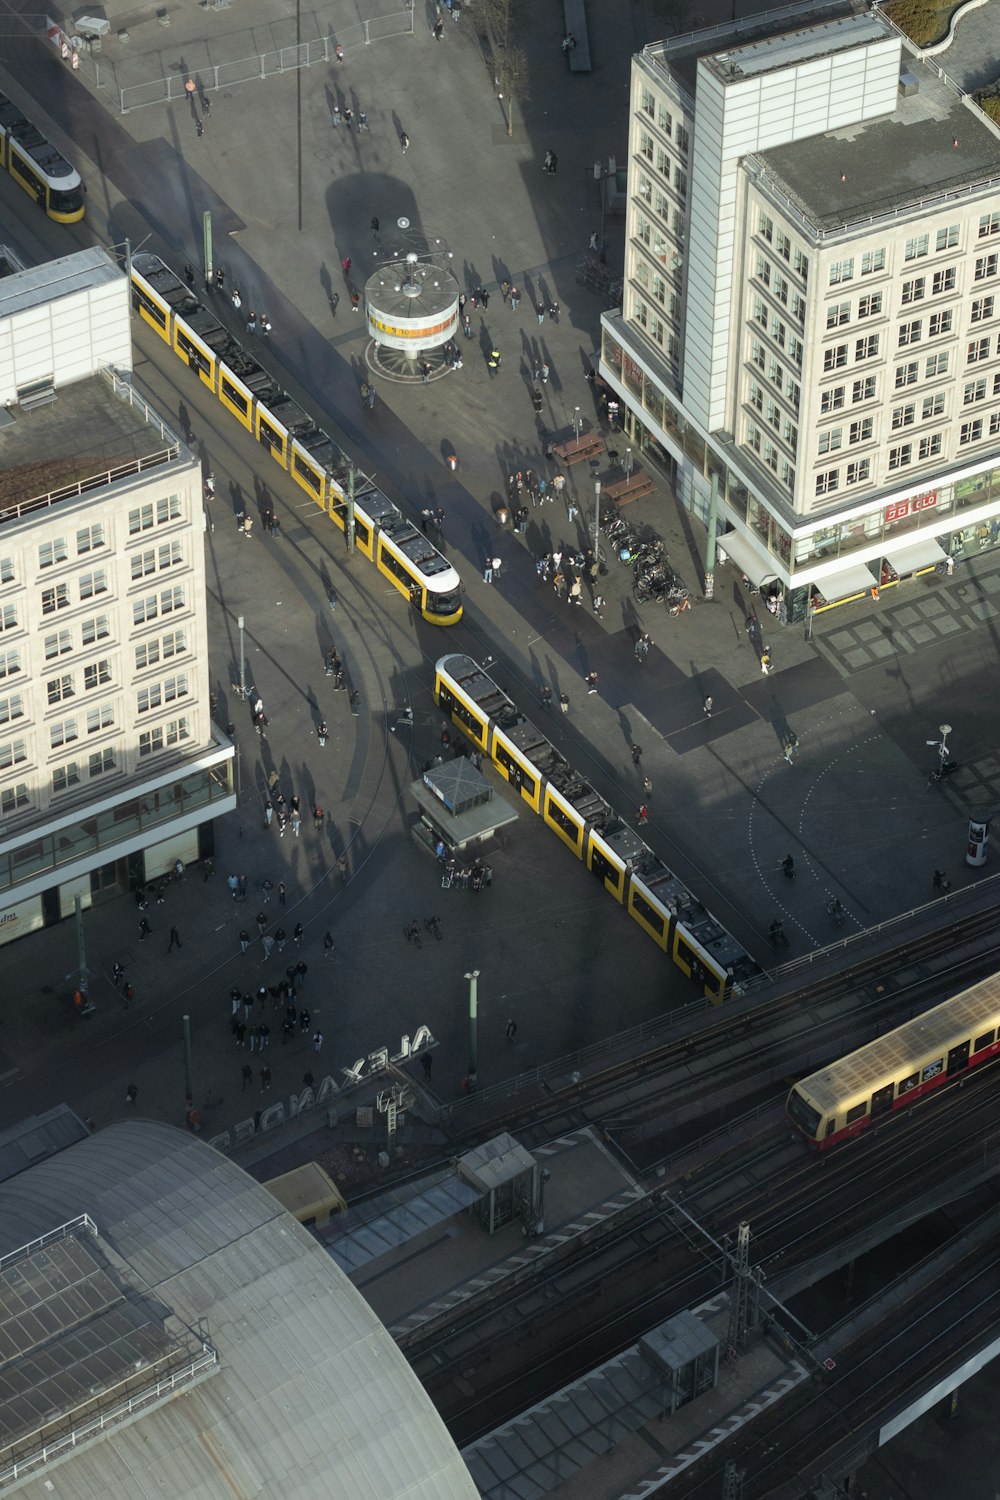 una veduta aerea di una città con una stazione ferroviaria